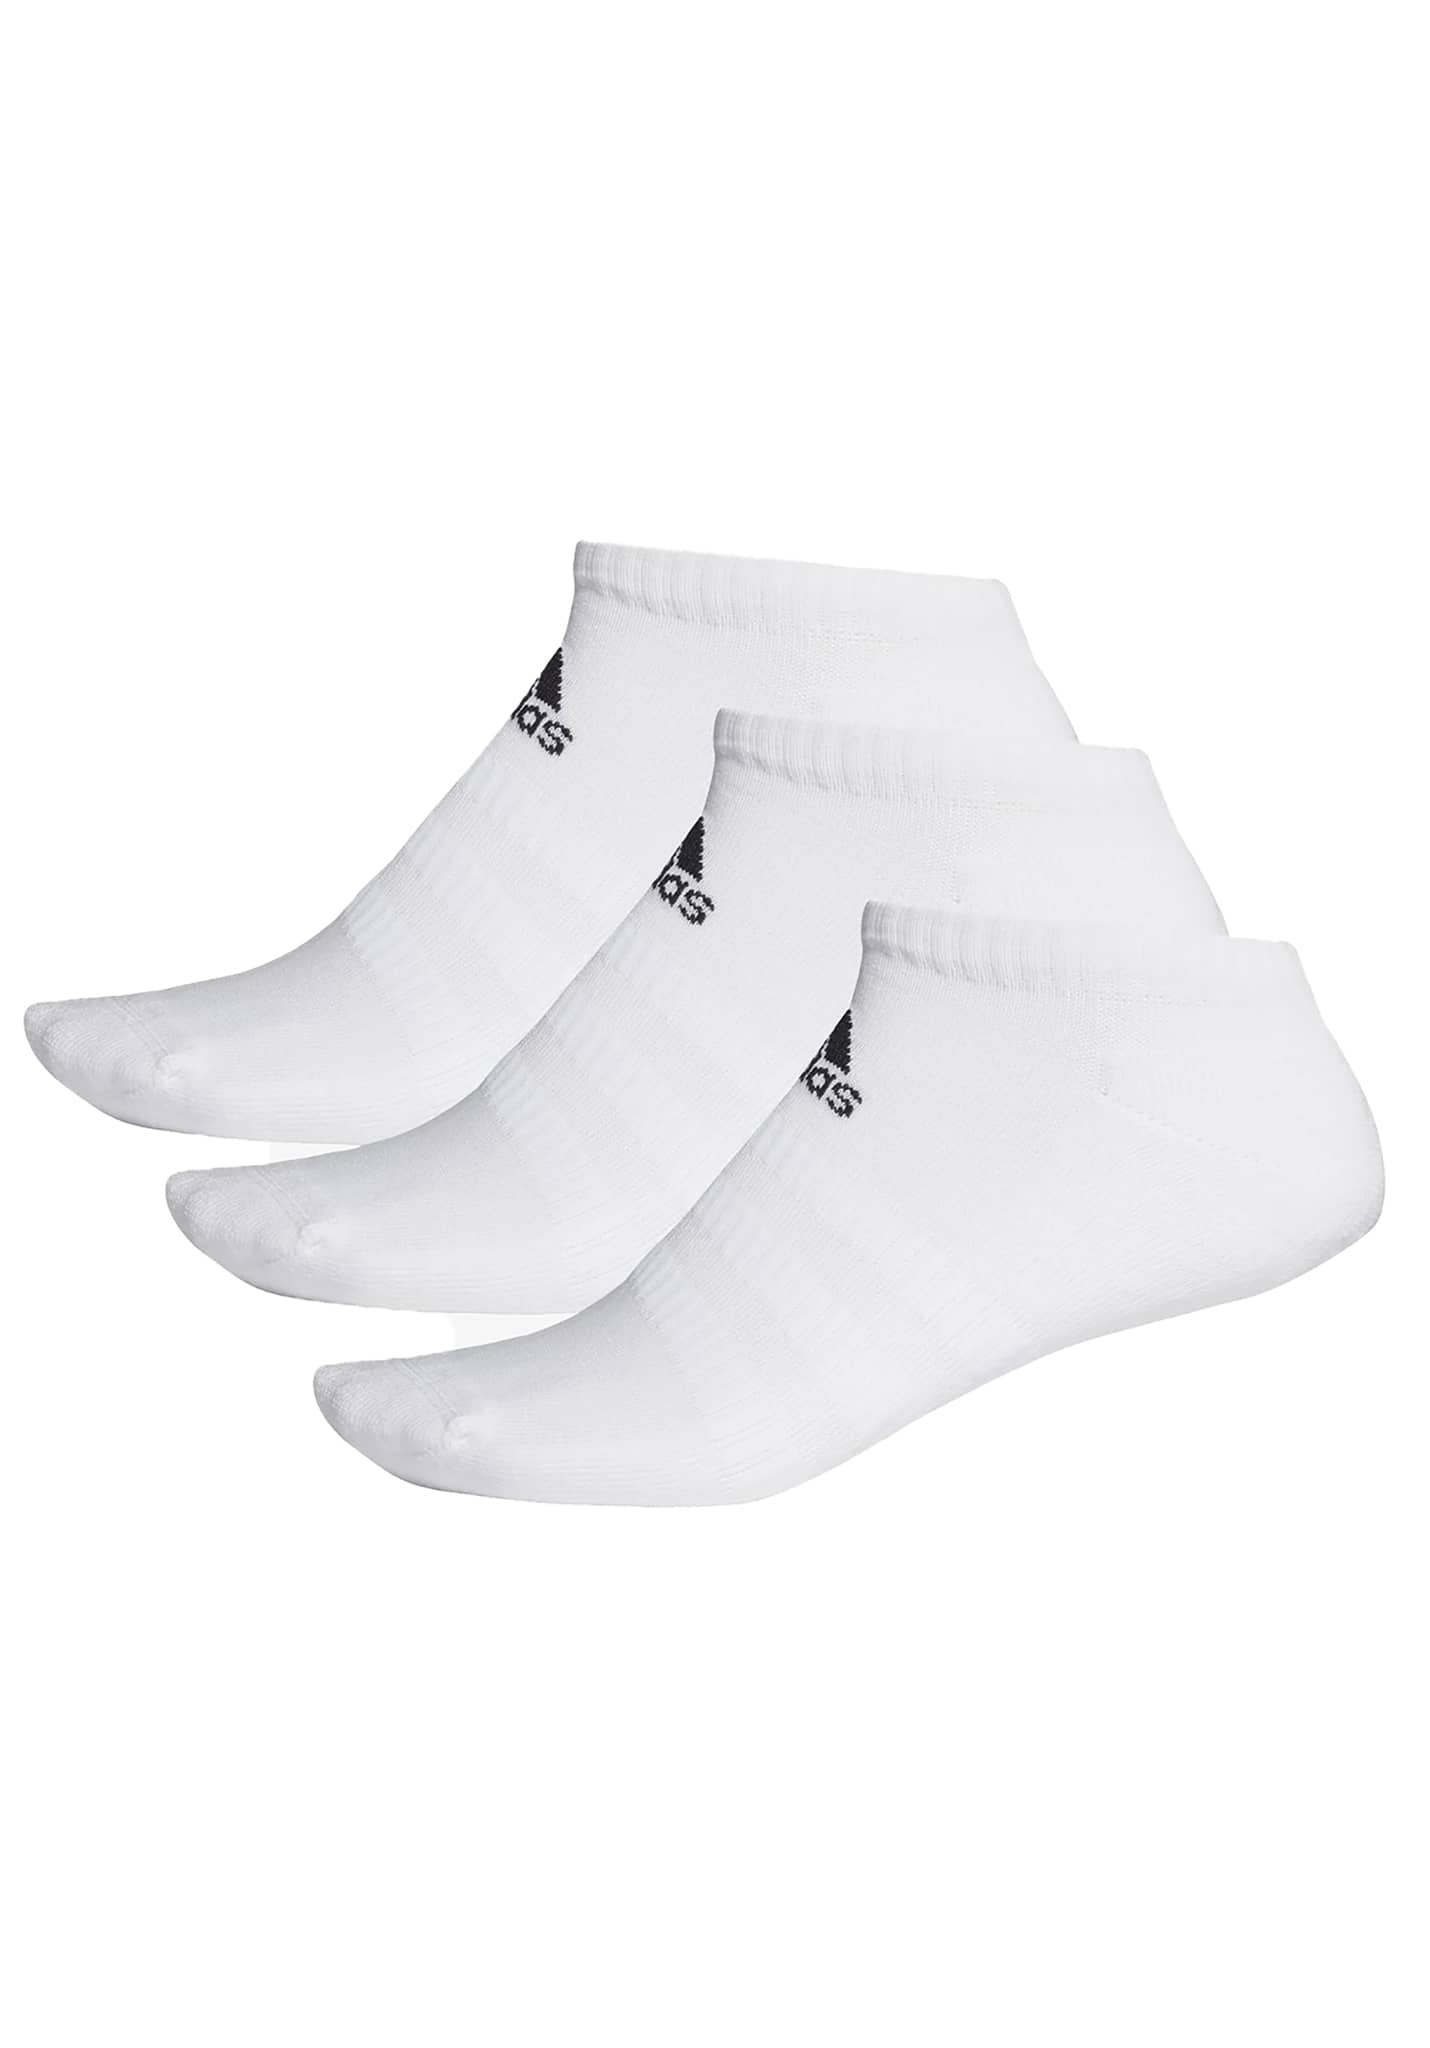 Adidas Originals No Show 3 Pack Kurze Socken white-black 43-46